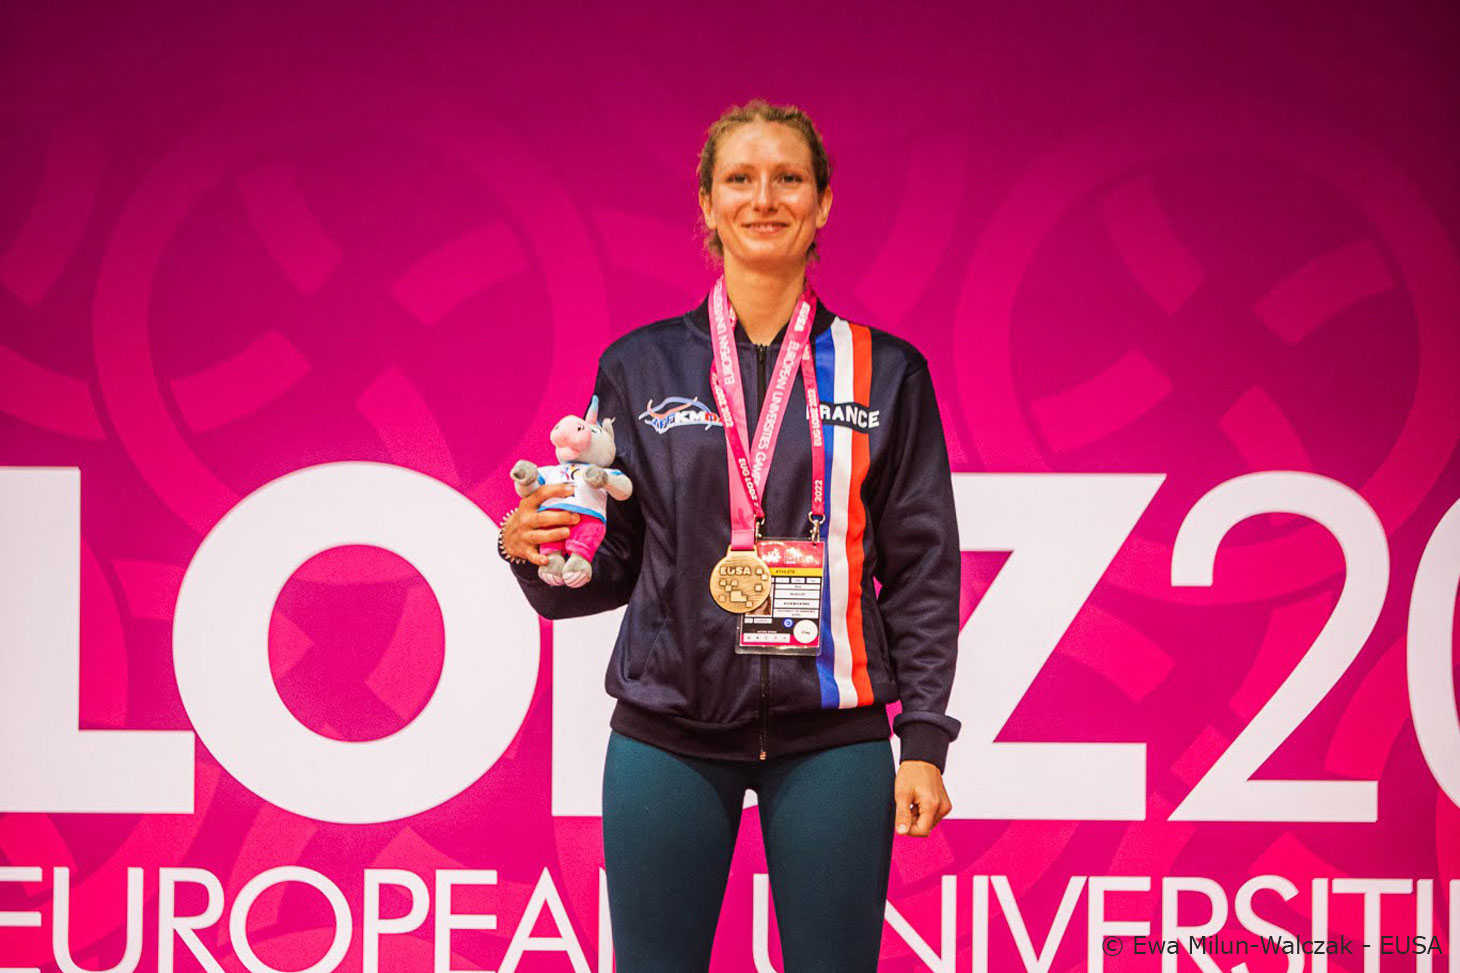 La médaille d’or d’Eva Guillot en kick boxing© Ewa Milun-Walczak - EUSA